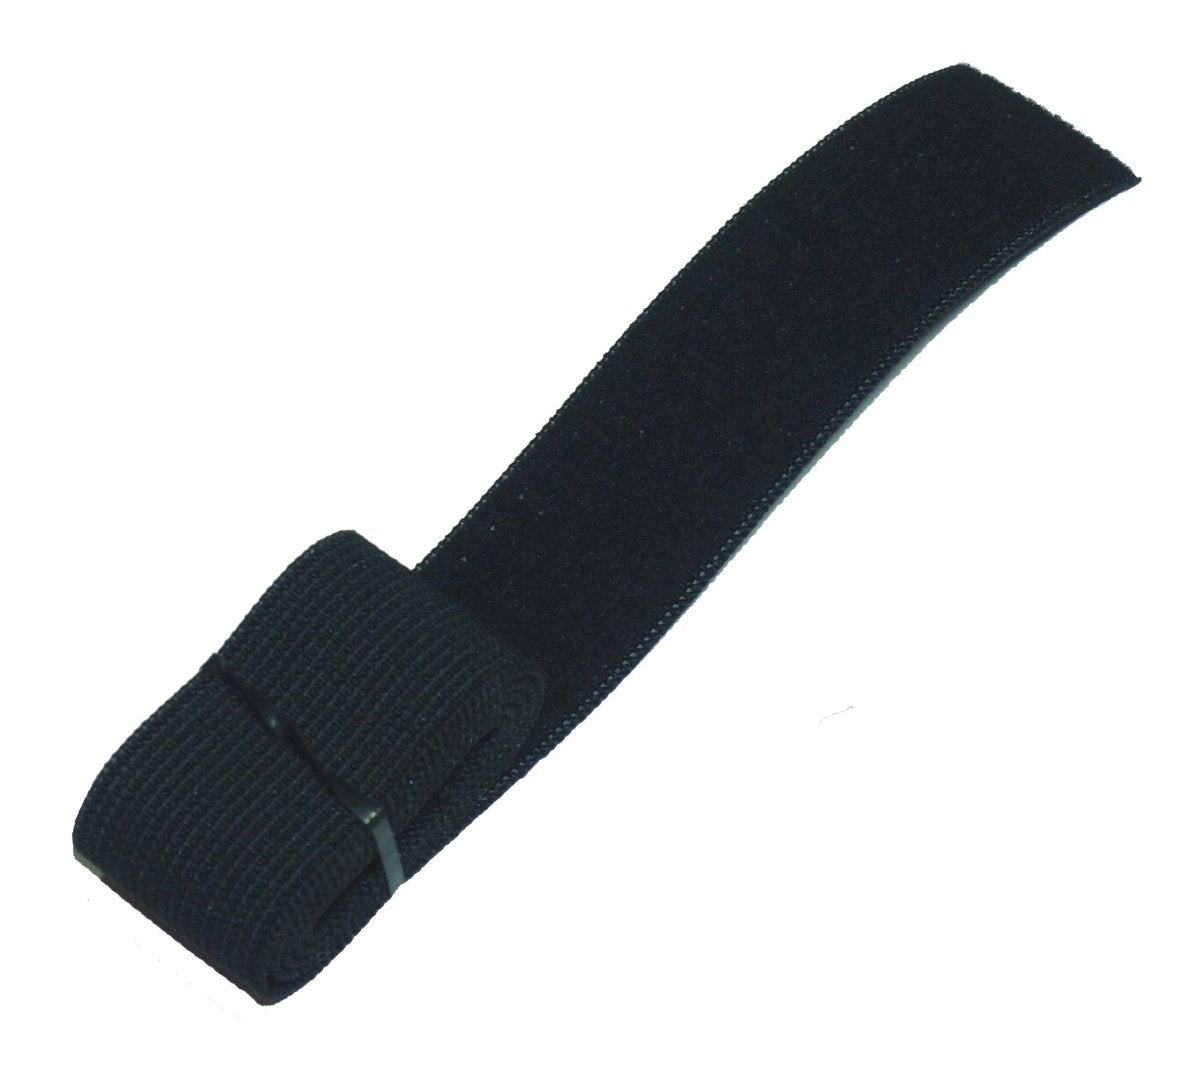 Benristraps 25mm plush elastic tape (five metres)